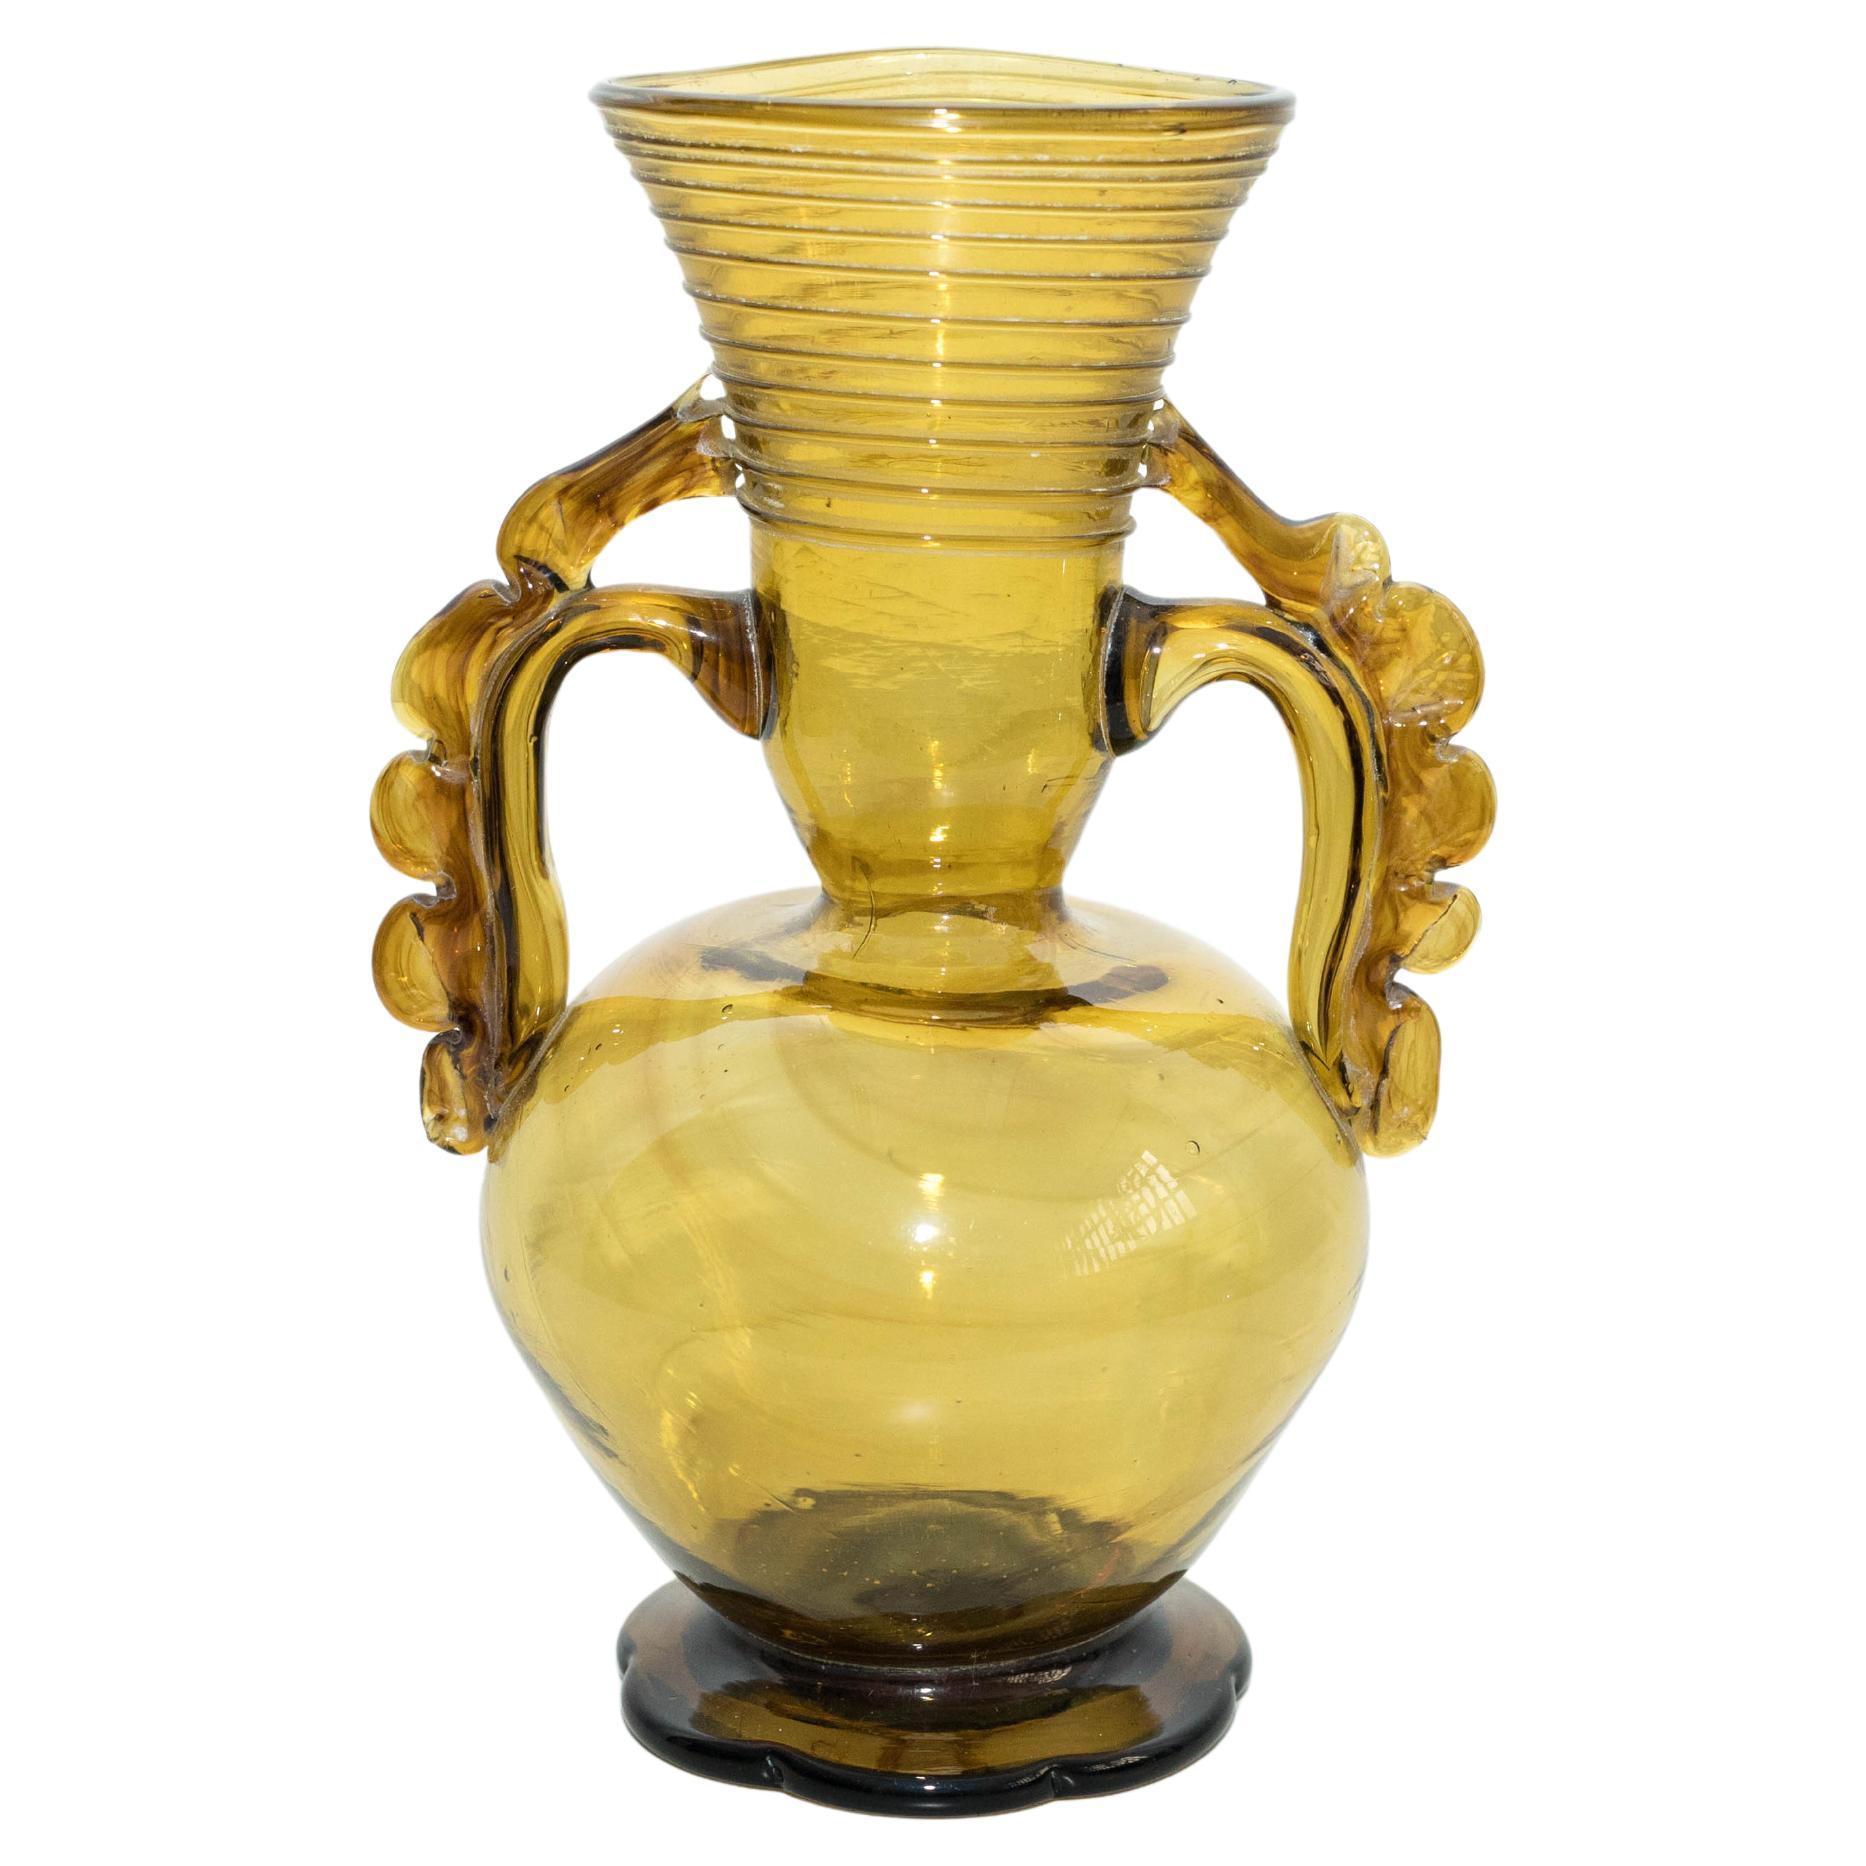 Catalanische Vase aus gelbem mundgeblasenem Glas, um 1930